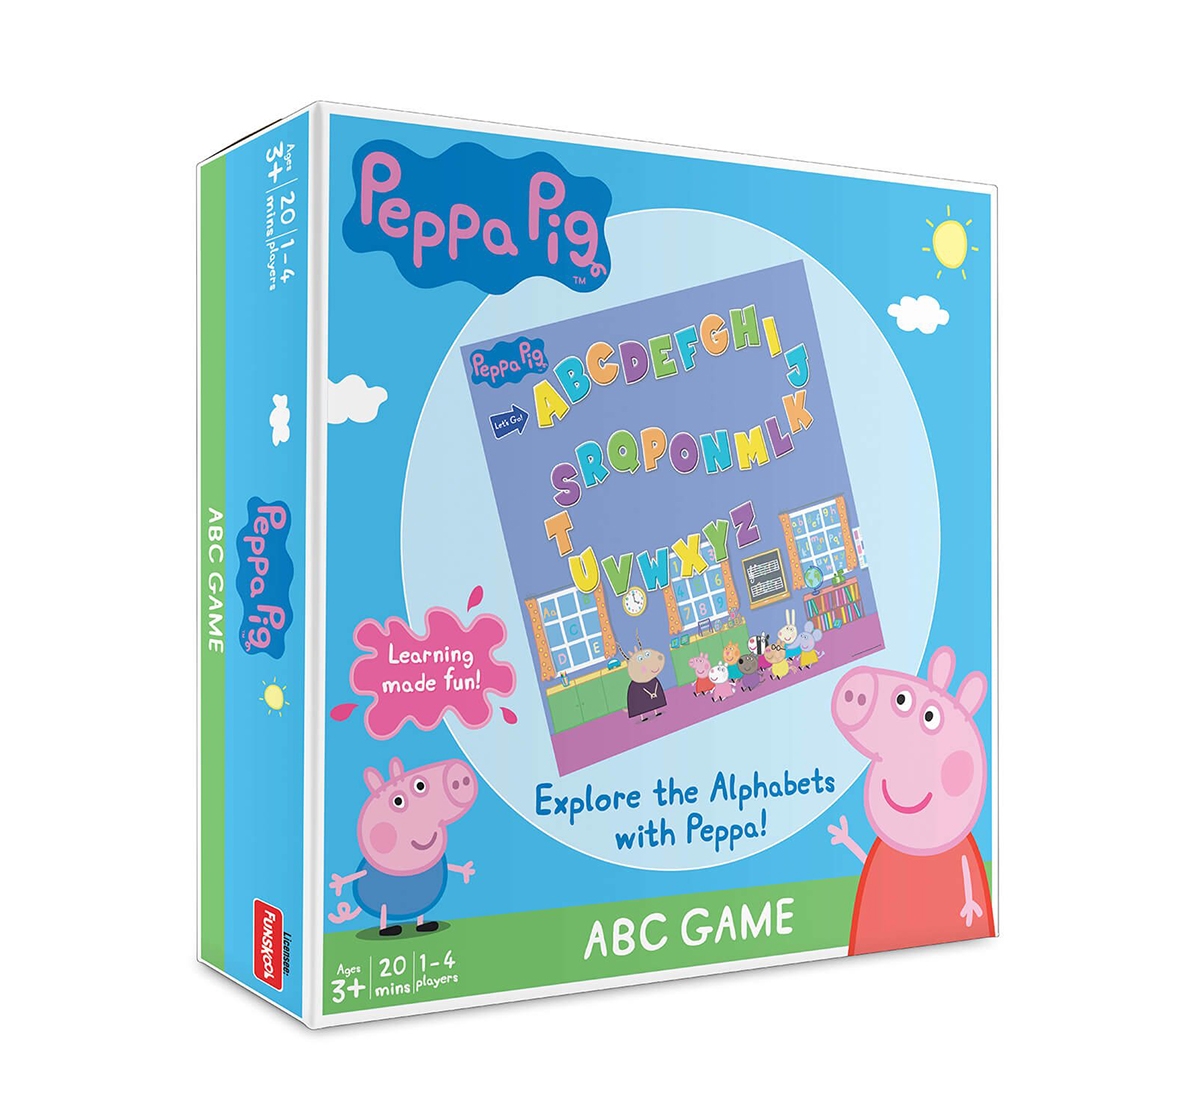 Funskool Peppa Pig A B C Game Games for Kids age 3Y+ 